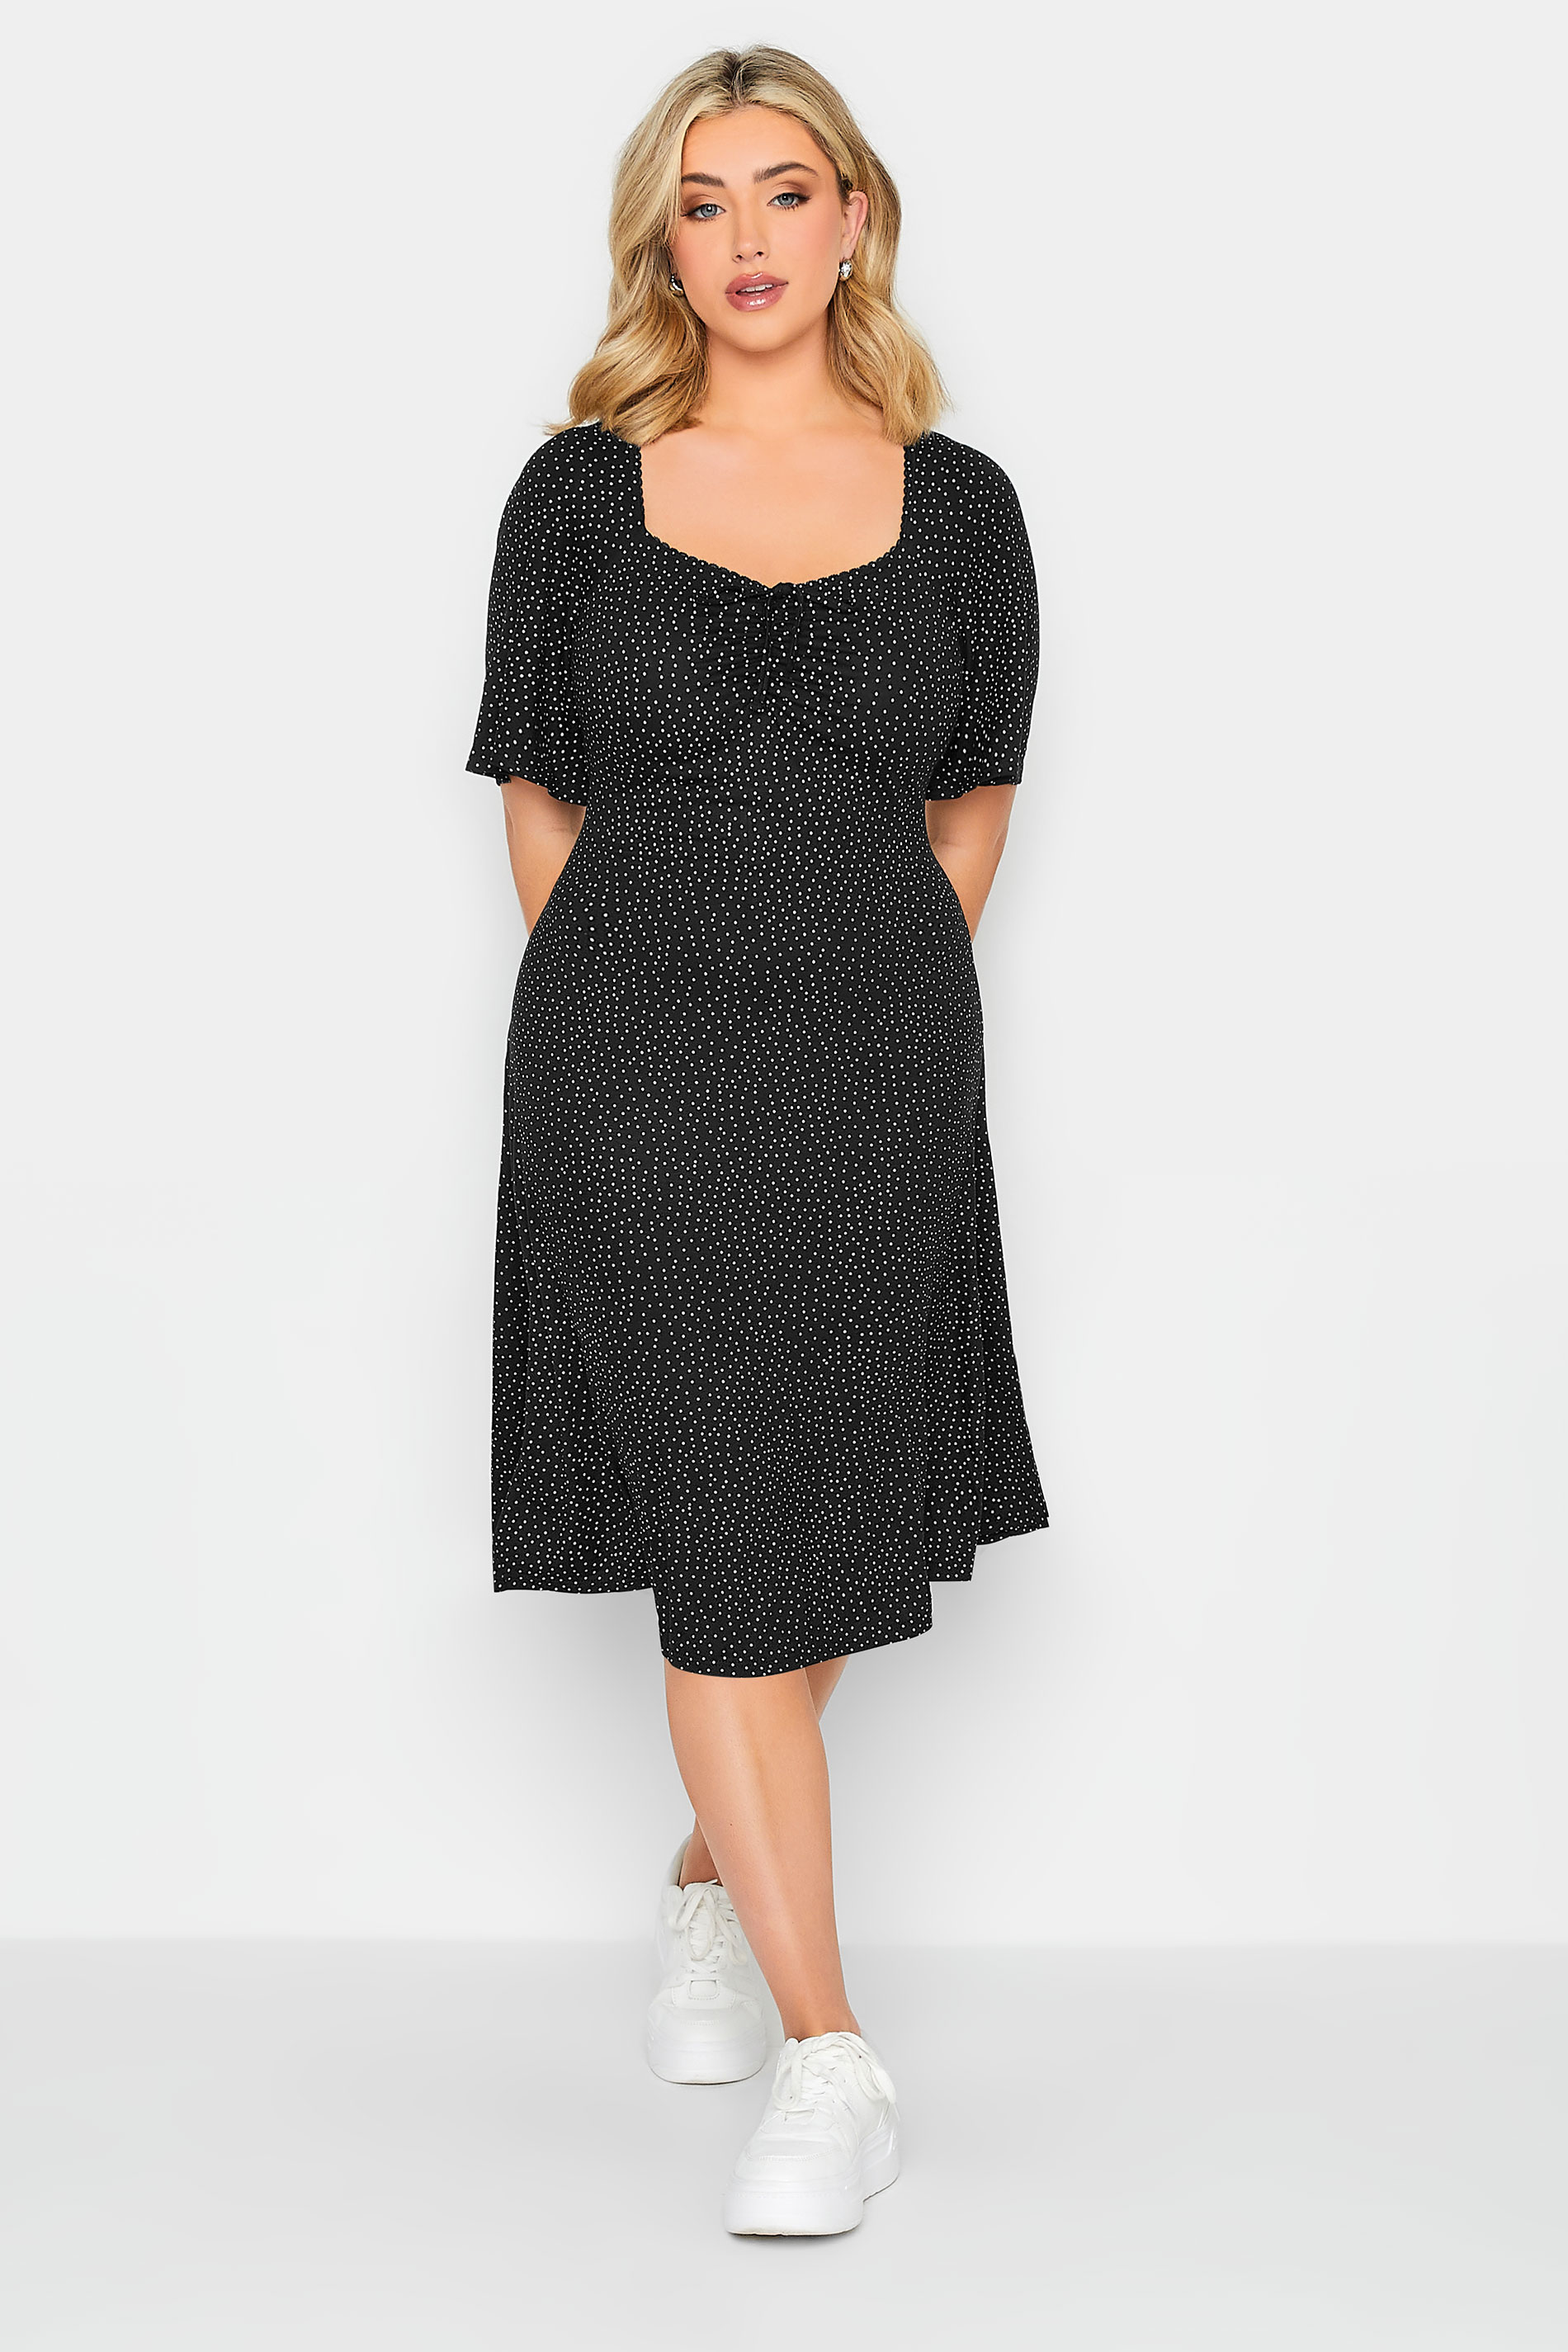 YOURS PETITE Plus Size Black Spot Print Lace Trim Midi Dress | Yours Clothing 2